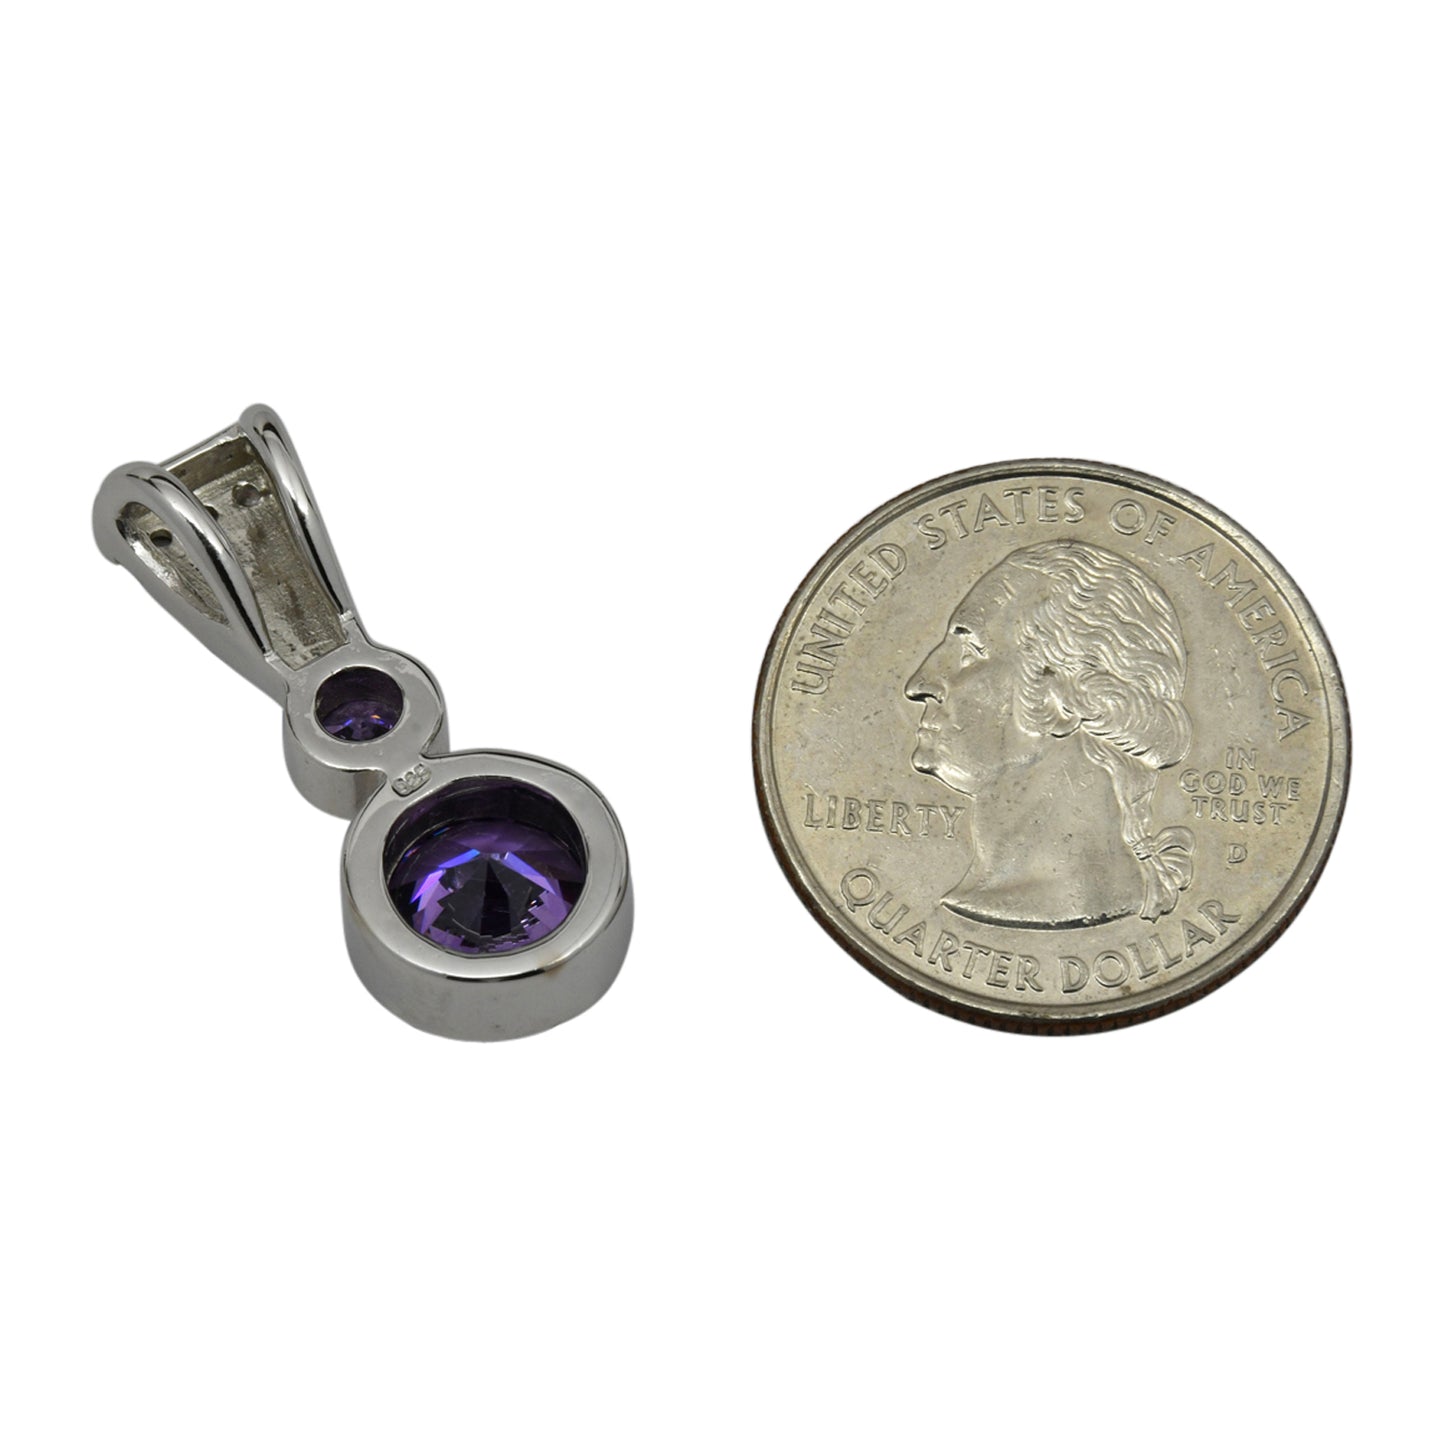 Sterling Silver White Lab Opal & Purple CZ Round Slider Pendant